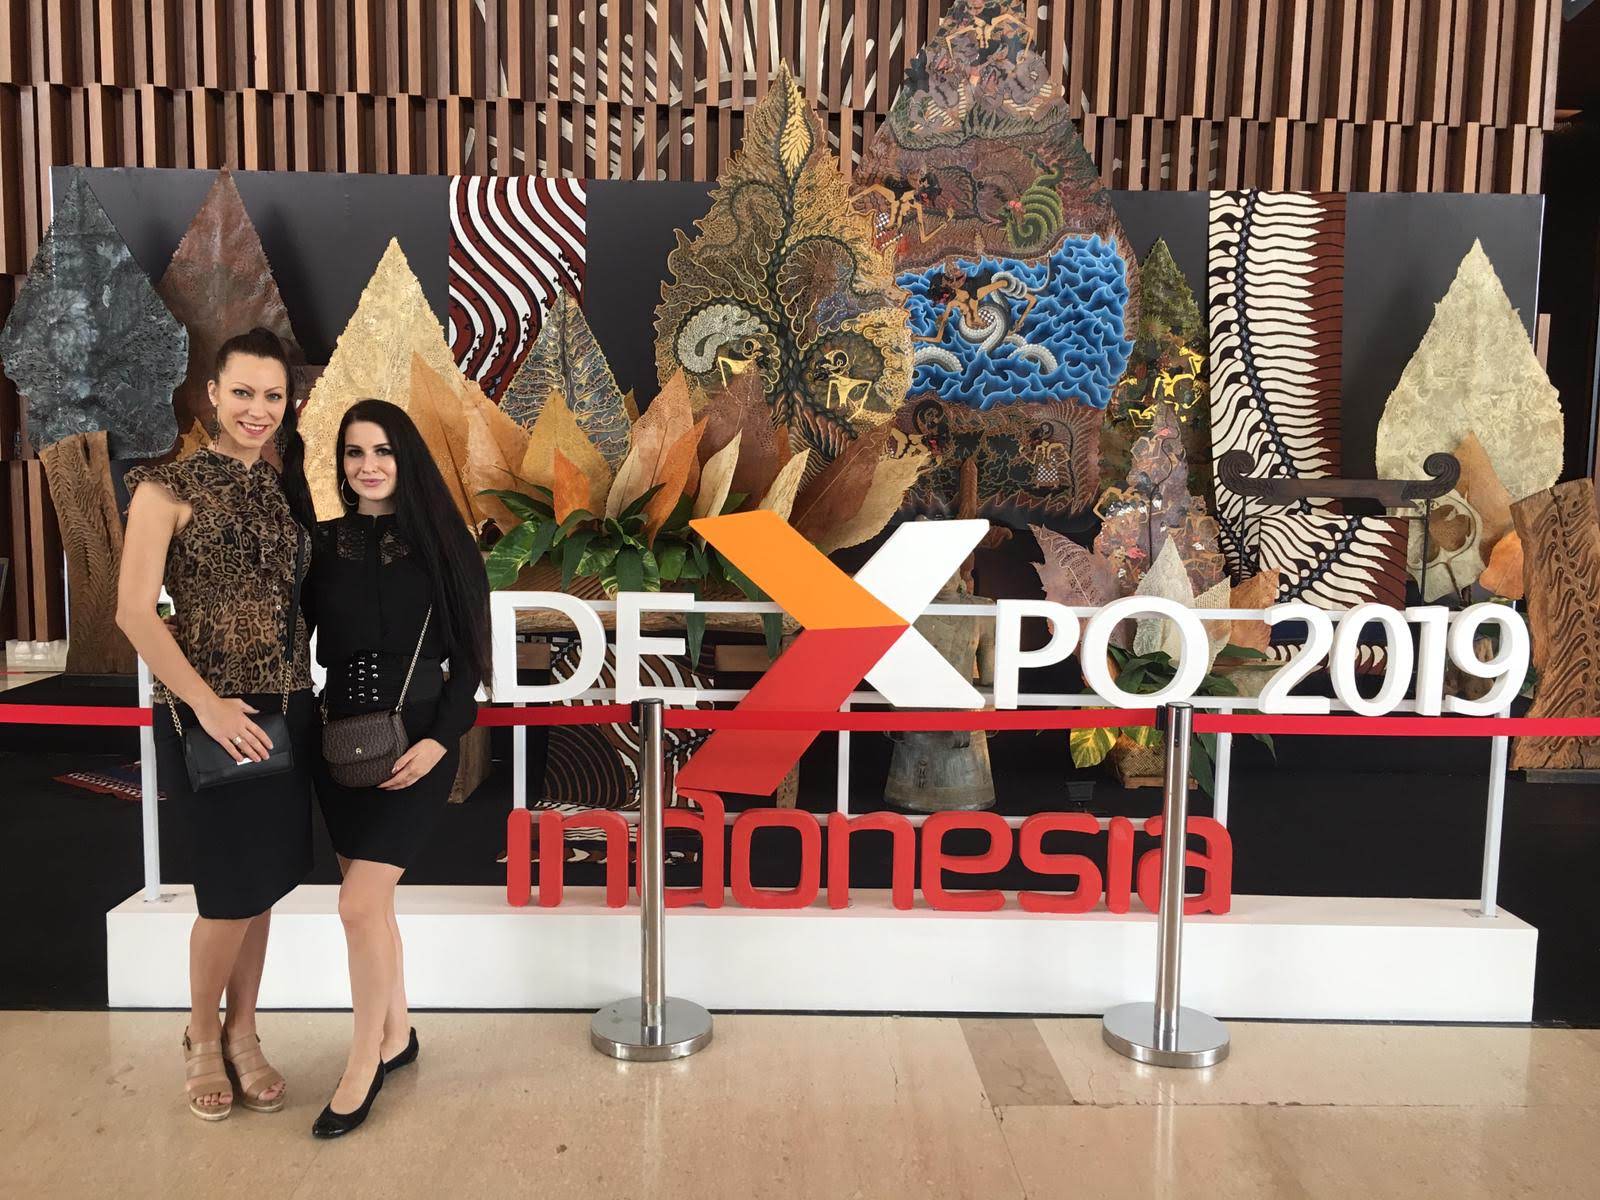 Trade Expo Indonesia 2019